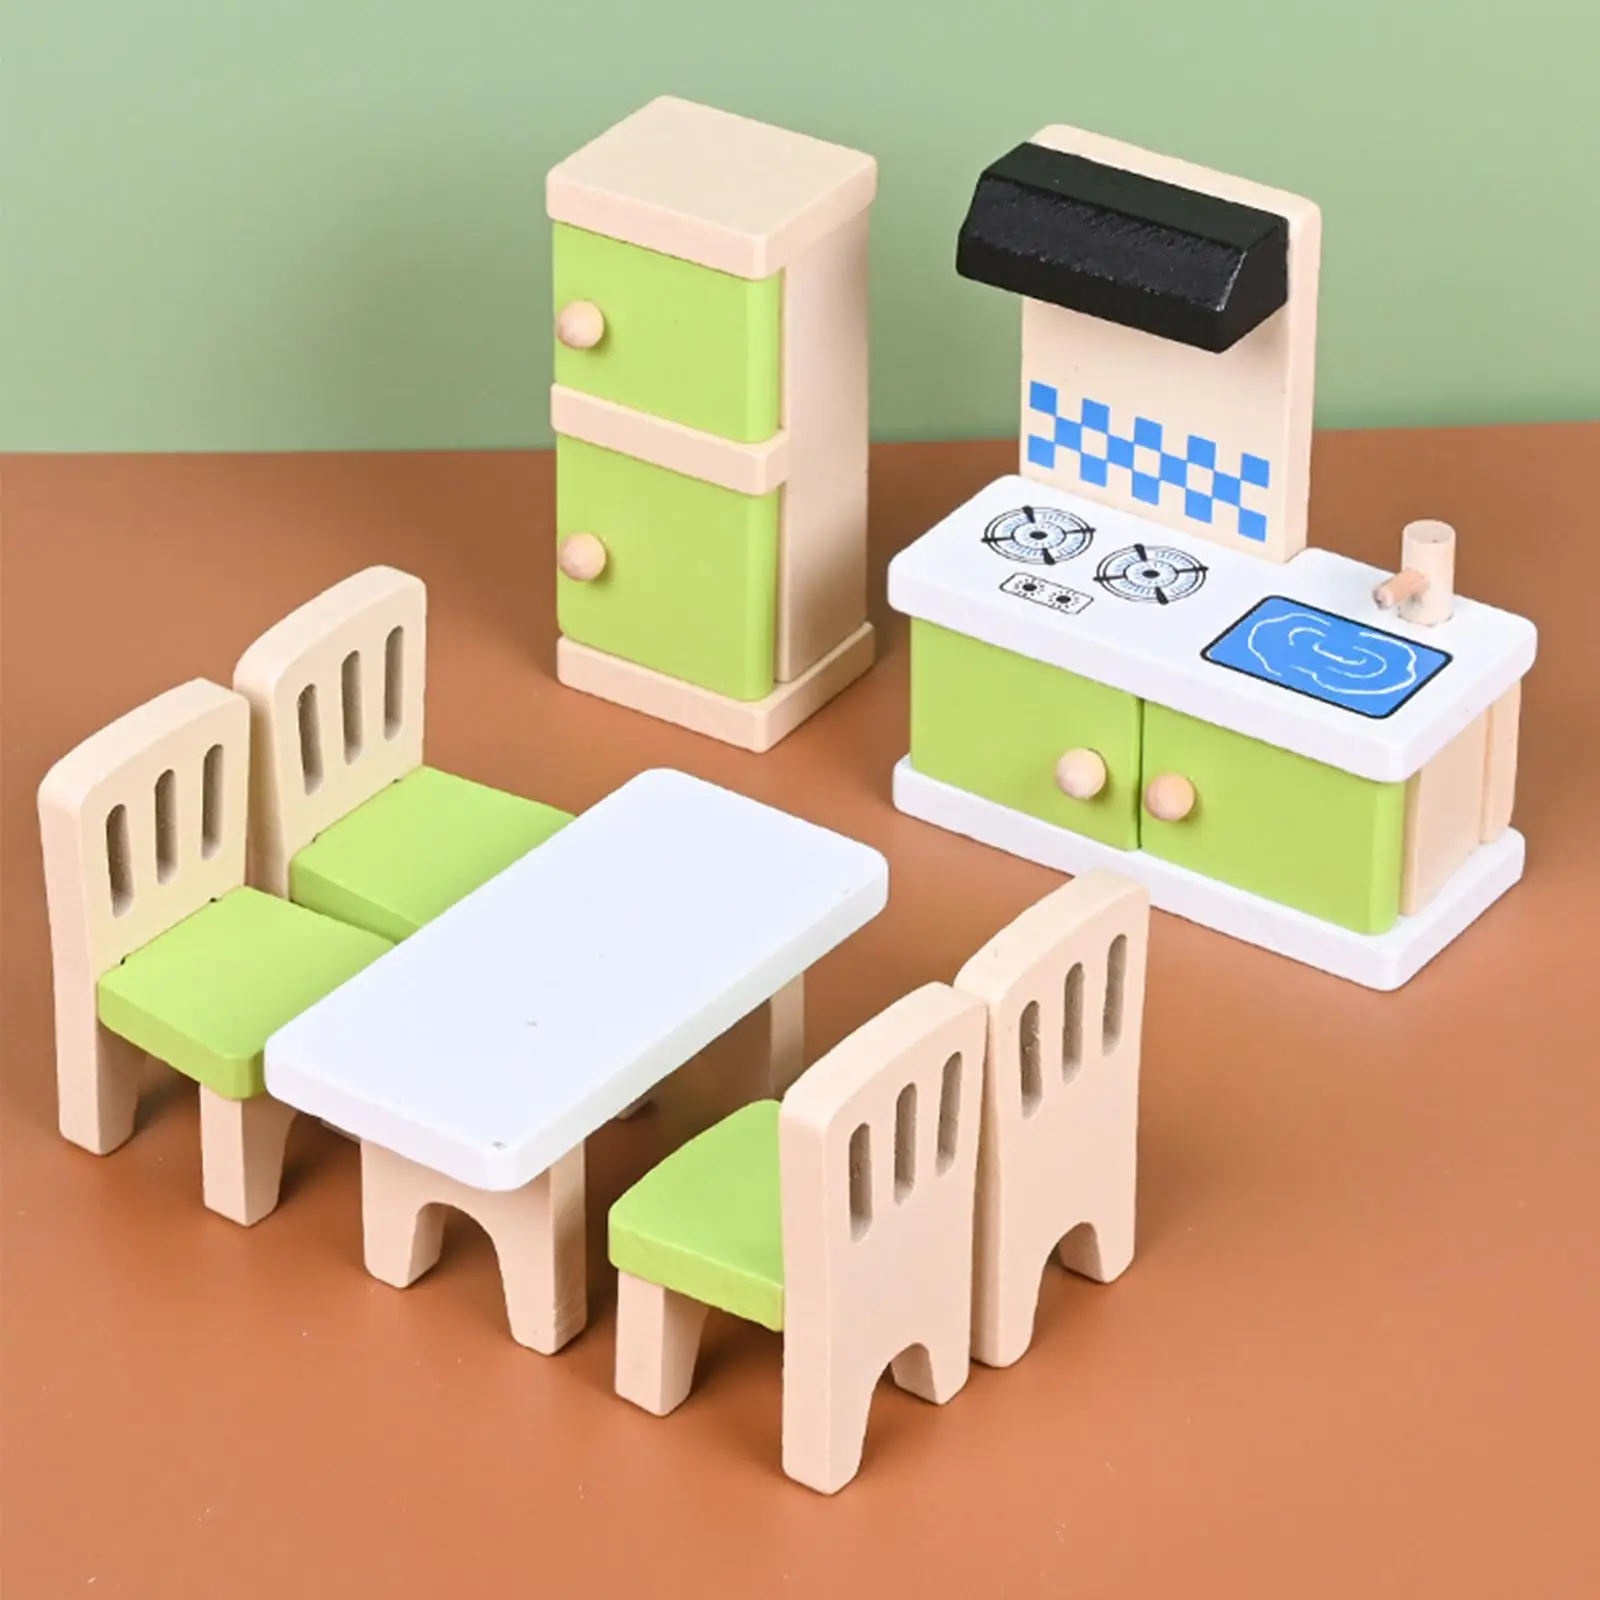 Dollhouse Furniture Set Photo Props DIY Scene Model for Decoration Ornament